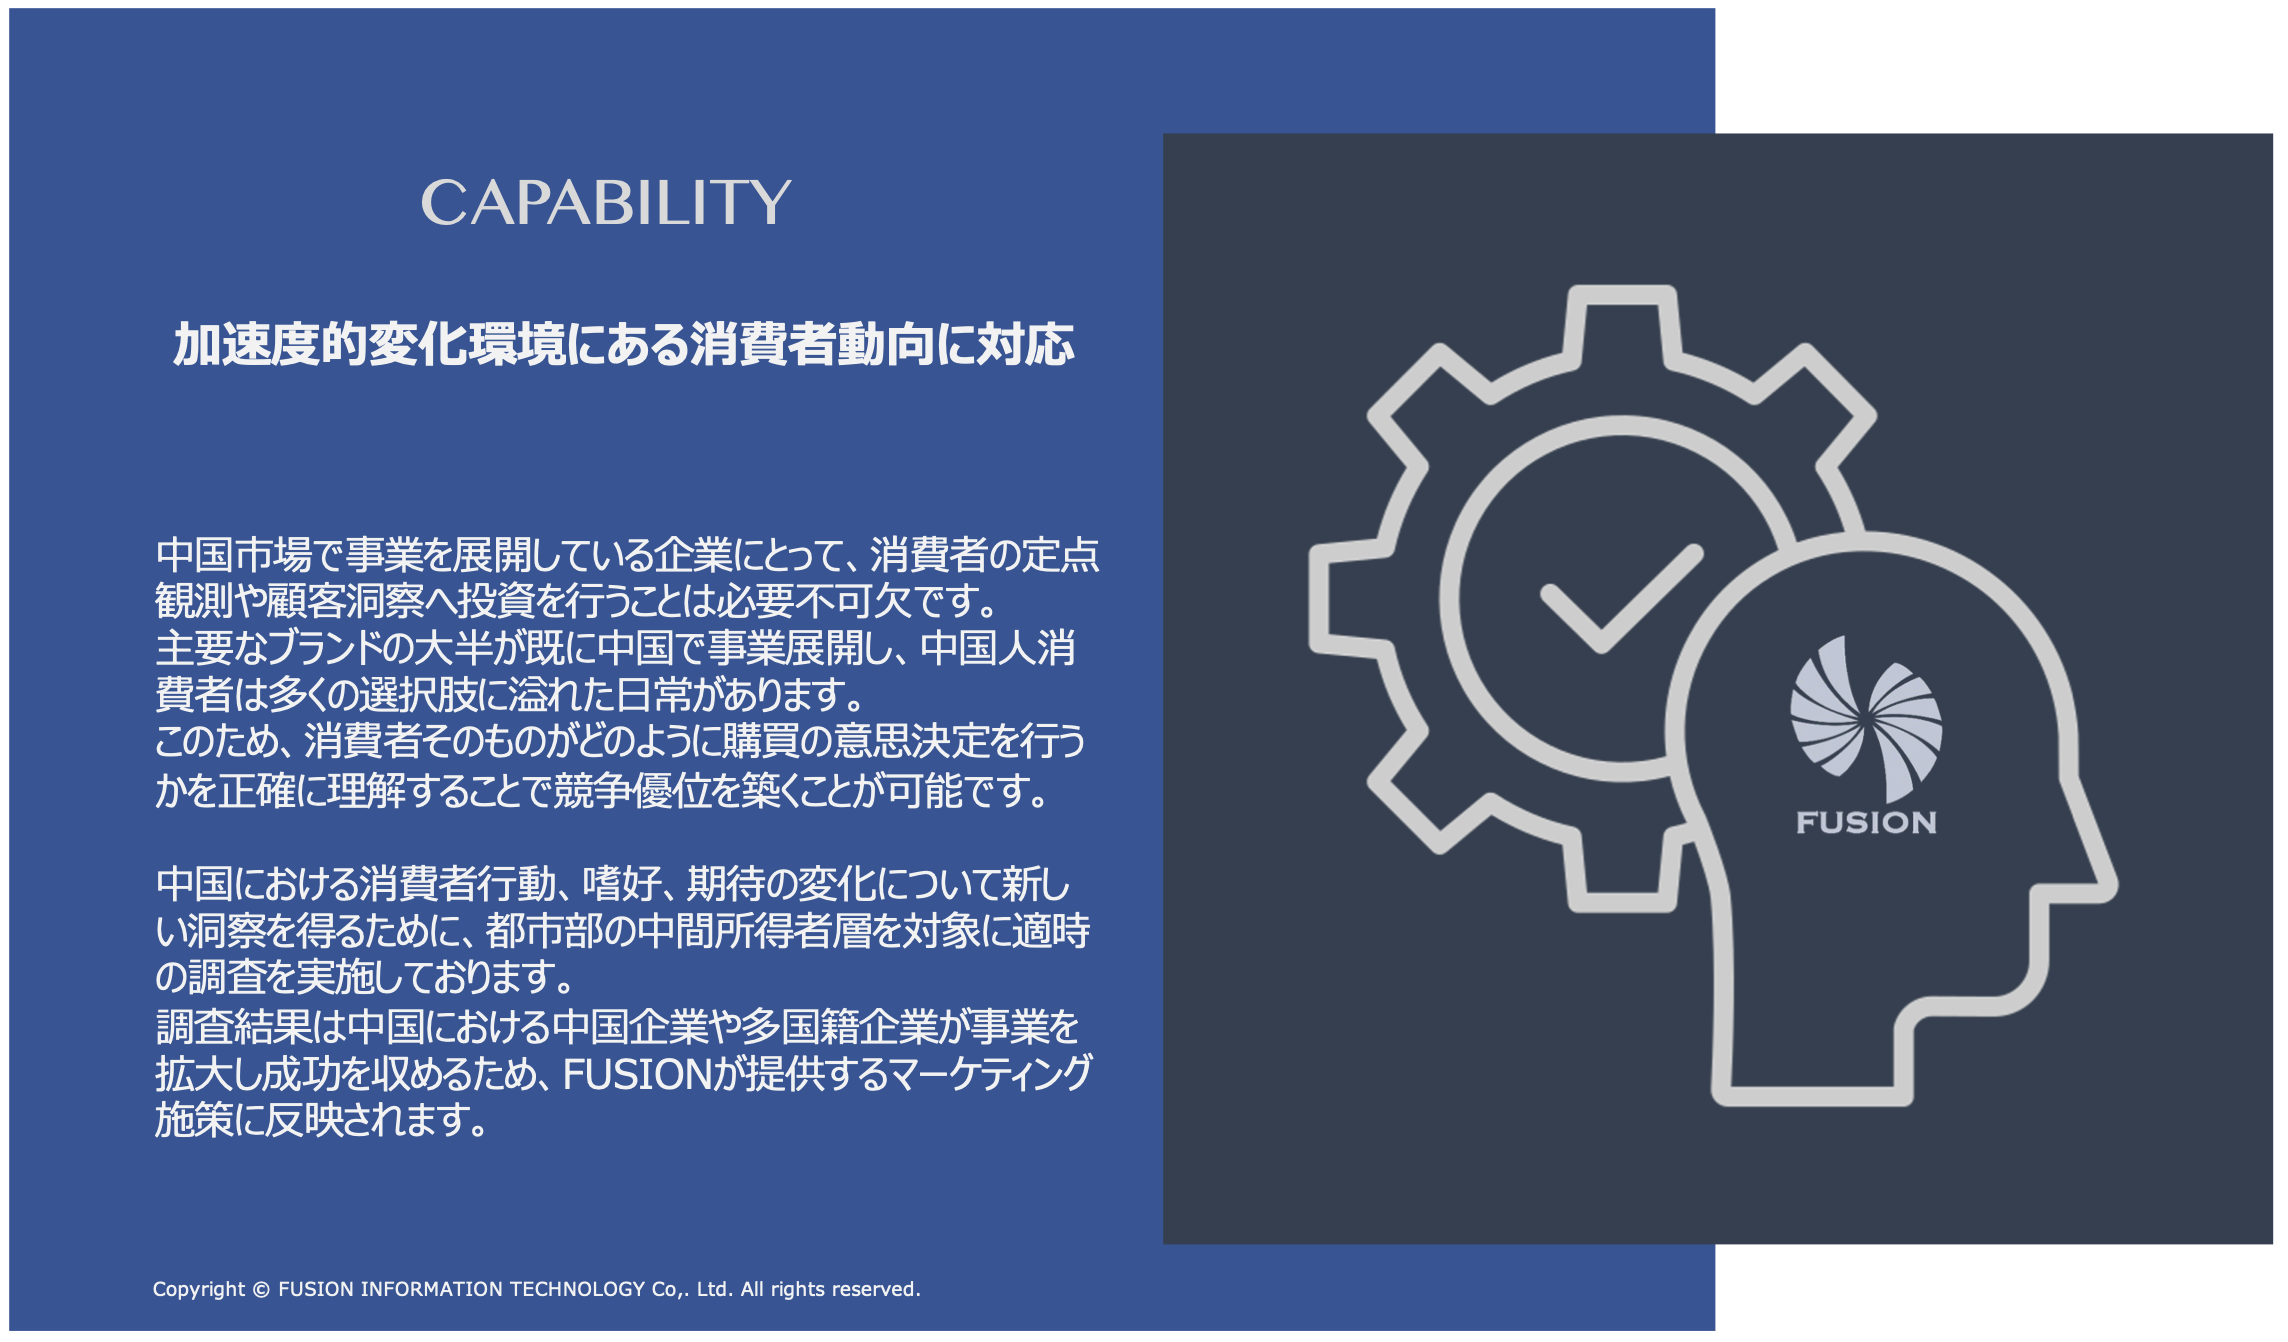 Japanブランド育成支援等事業の公募開始 株式会社 Fusion Information Technologyのプレスリリース